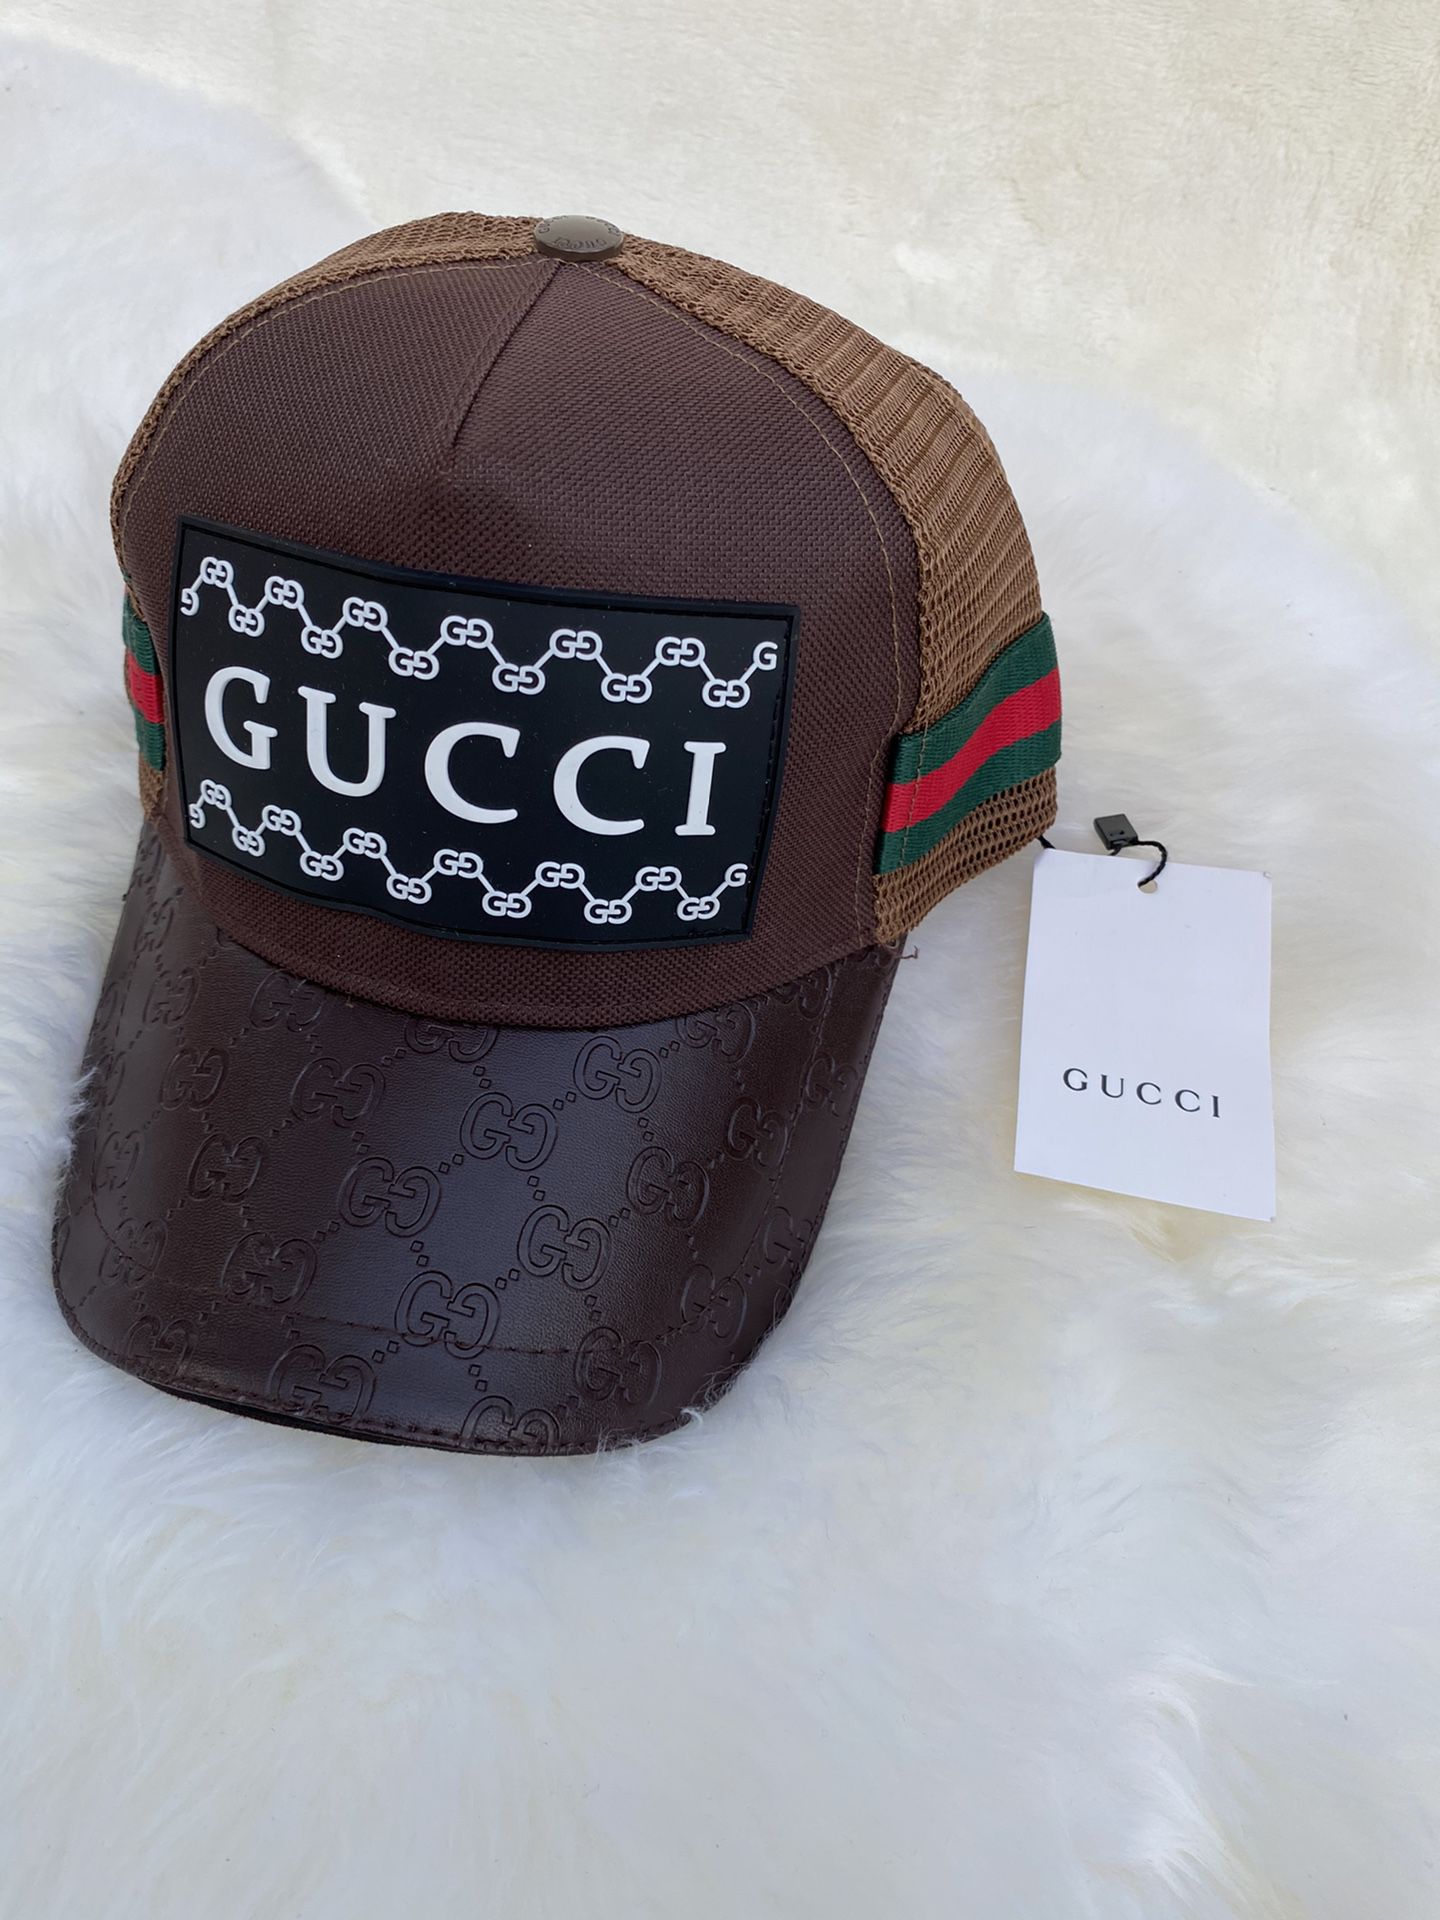 Brown Gucci hat $50